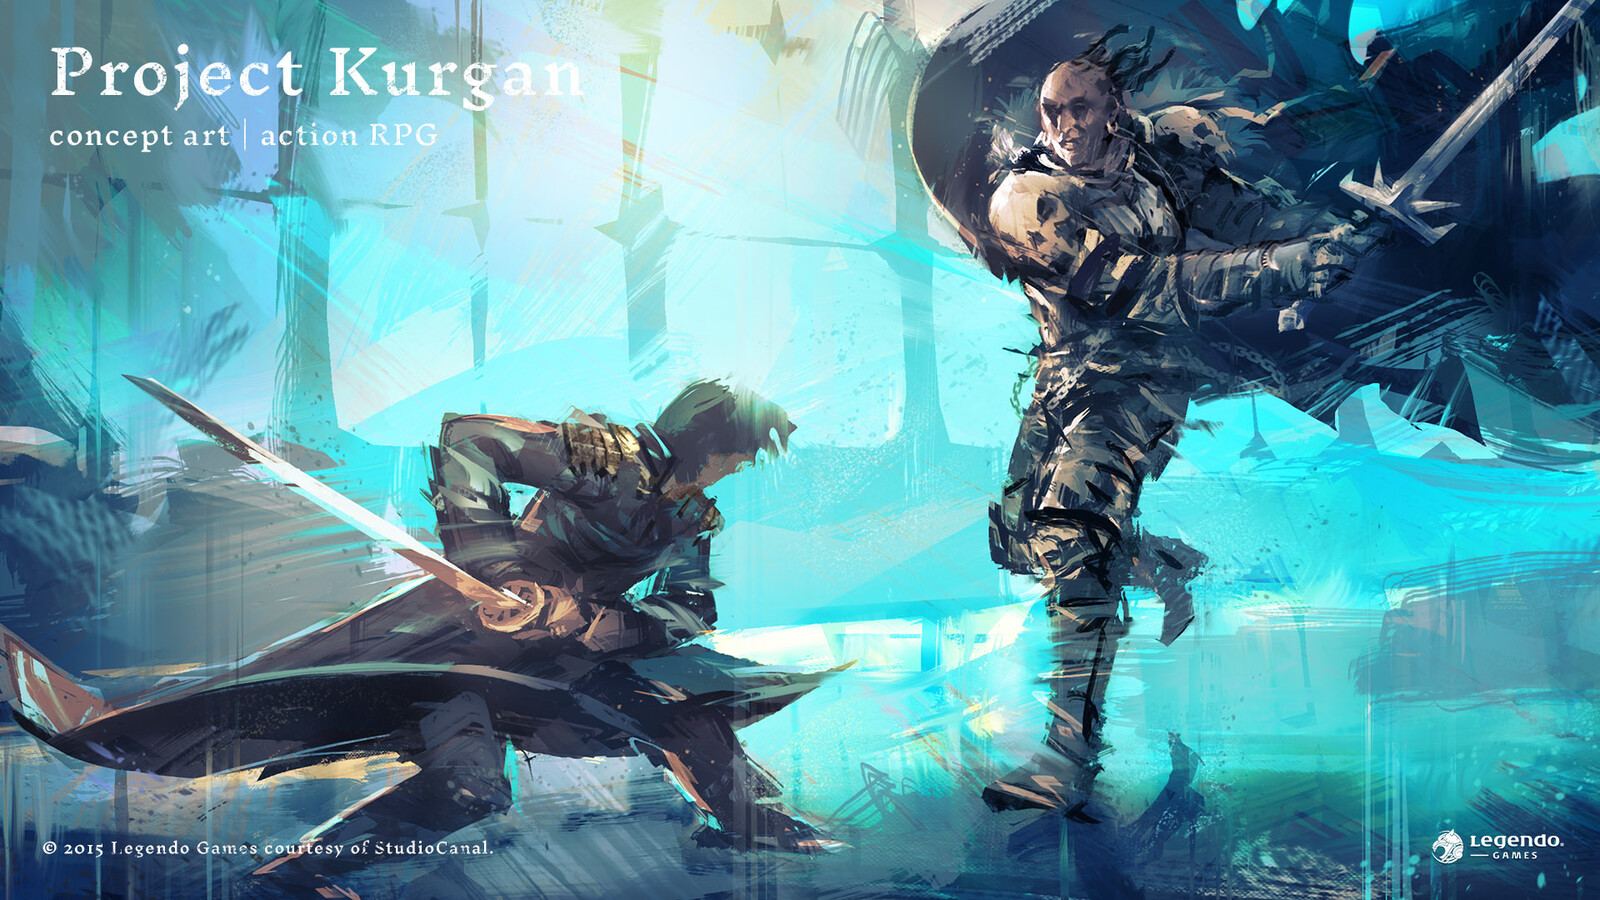 Canceled in 2015. Project Kurgan (Highlander) action RPG concept art by J. Otto Szatmari for Legendo Games.